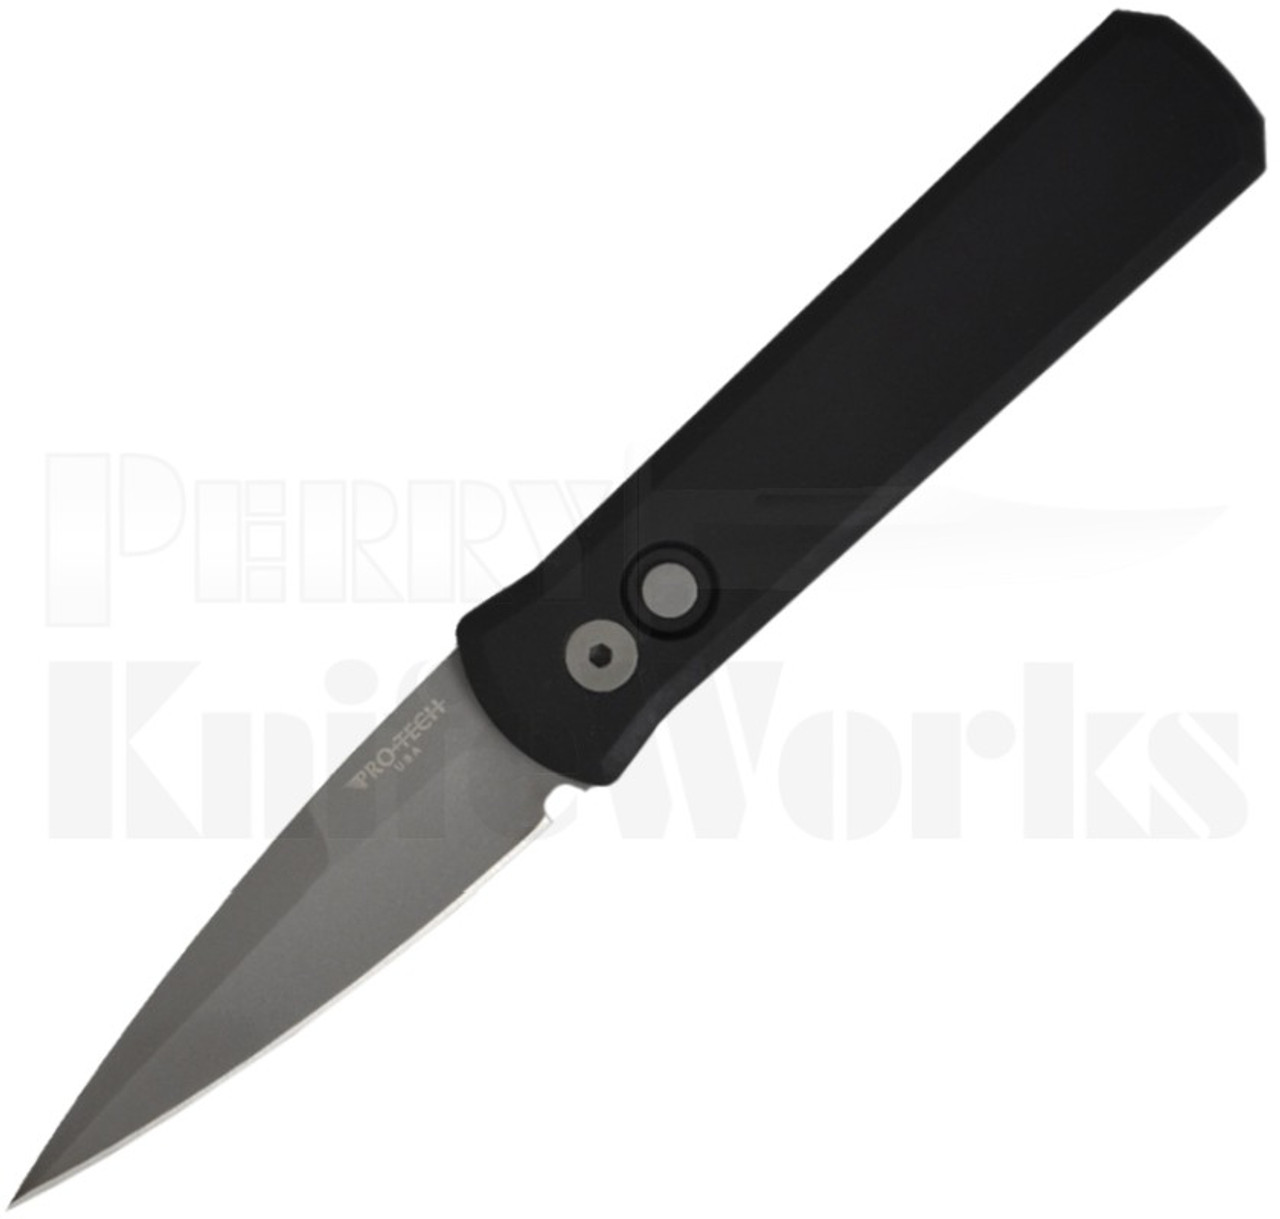 Protech Godson Black Automatic Knife 720 - Bead Blast Blade